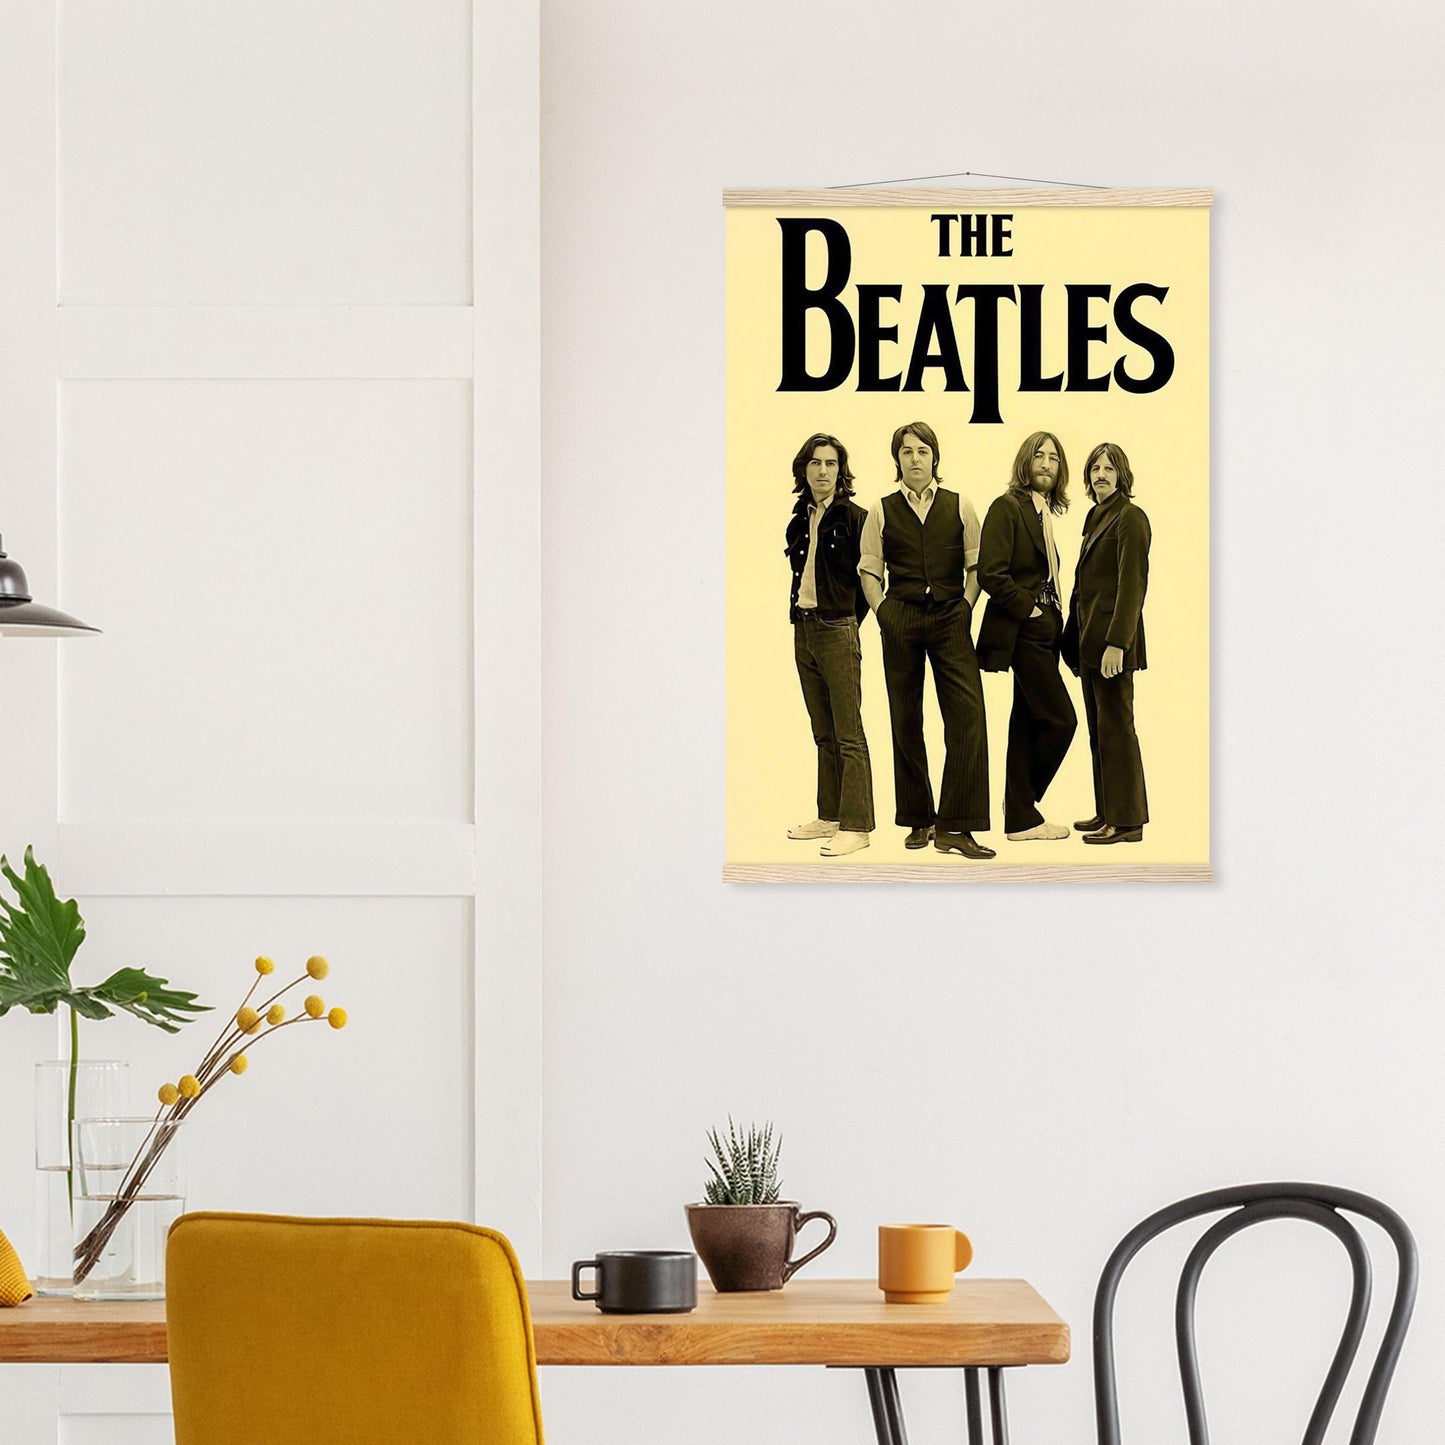 The Beatles Vintage Poster Reprint on Premium Matte Paper - Posterify